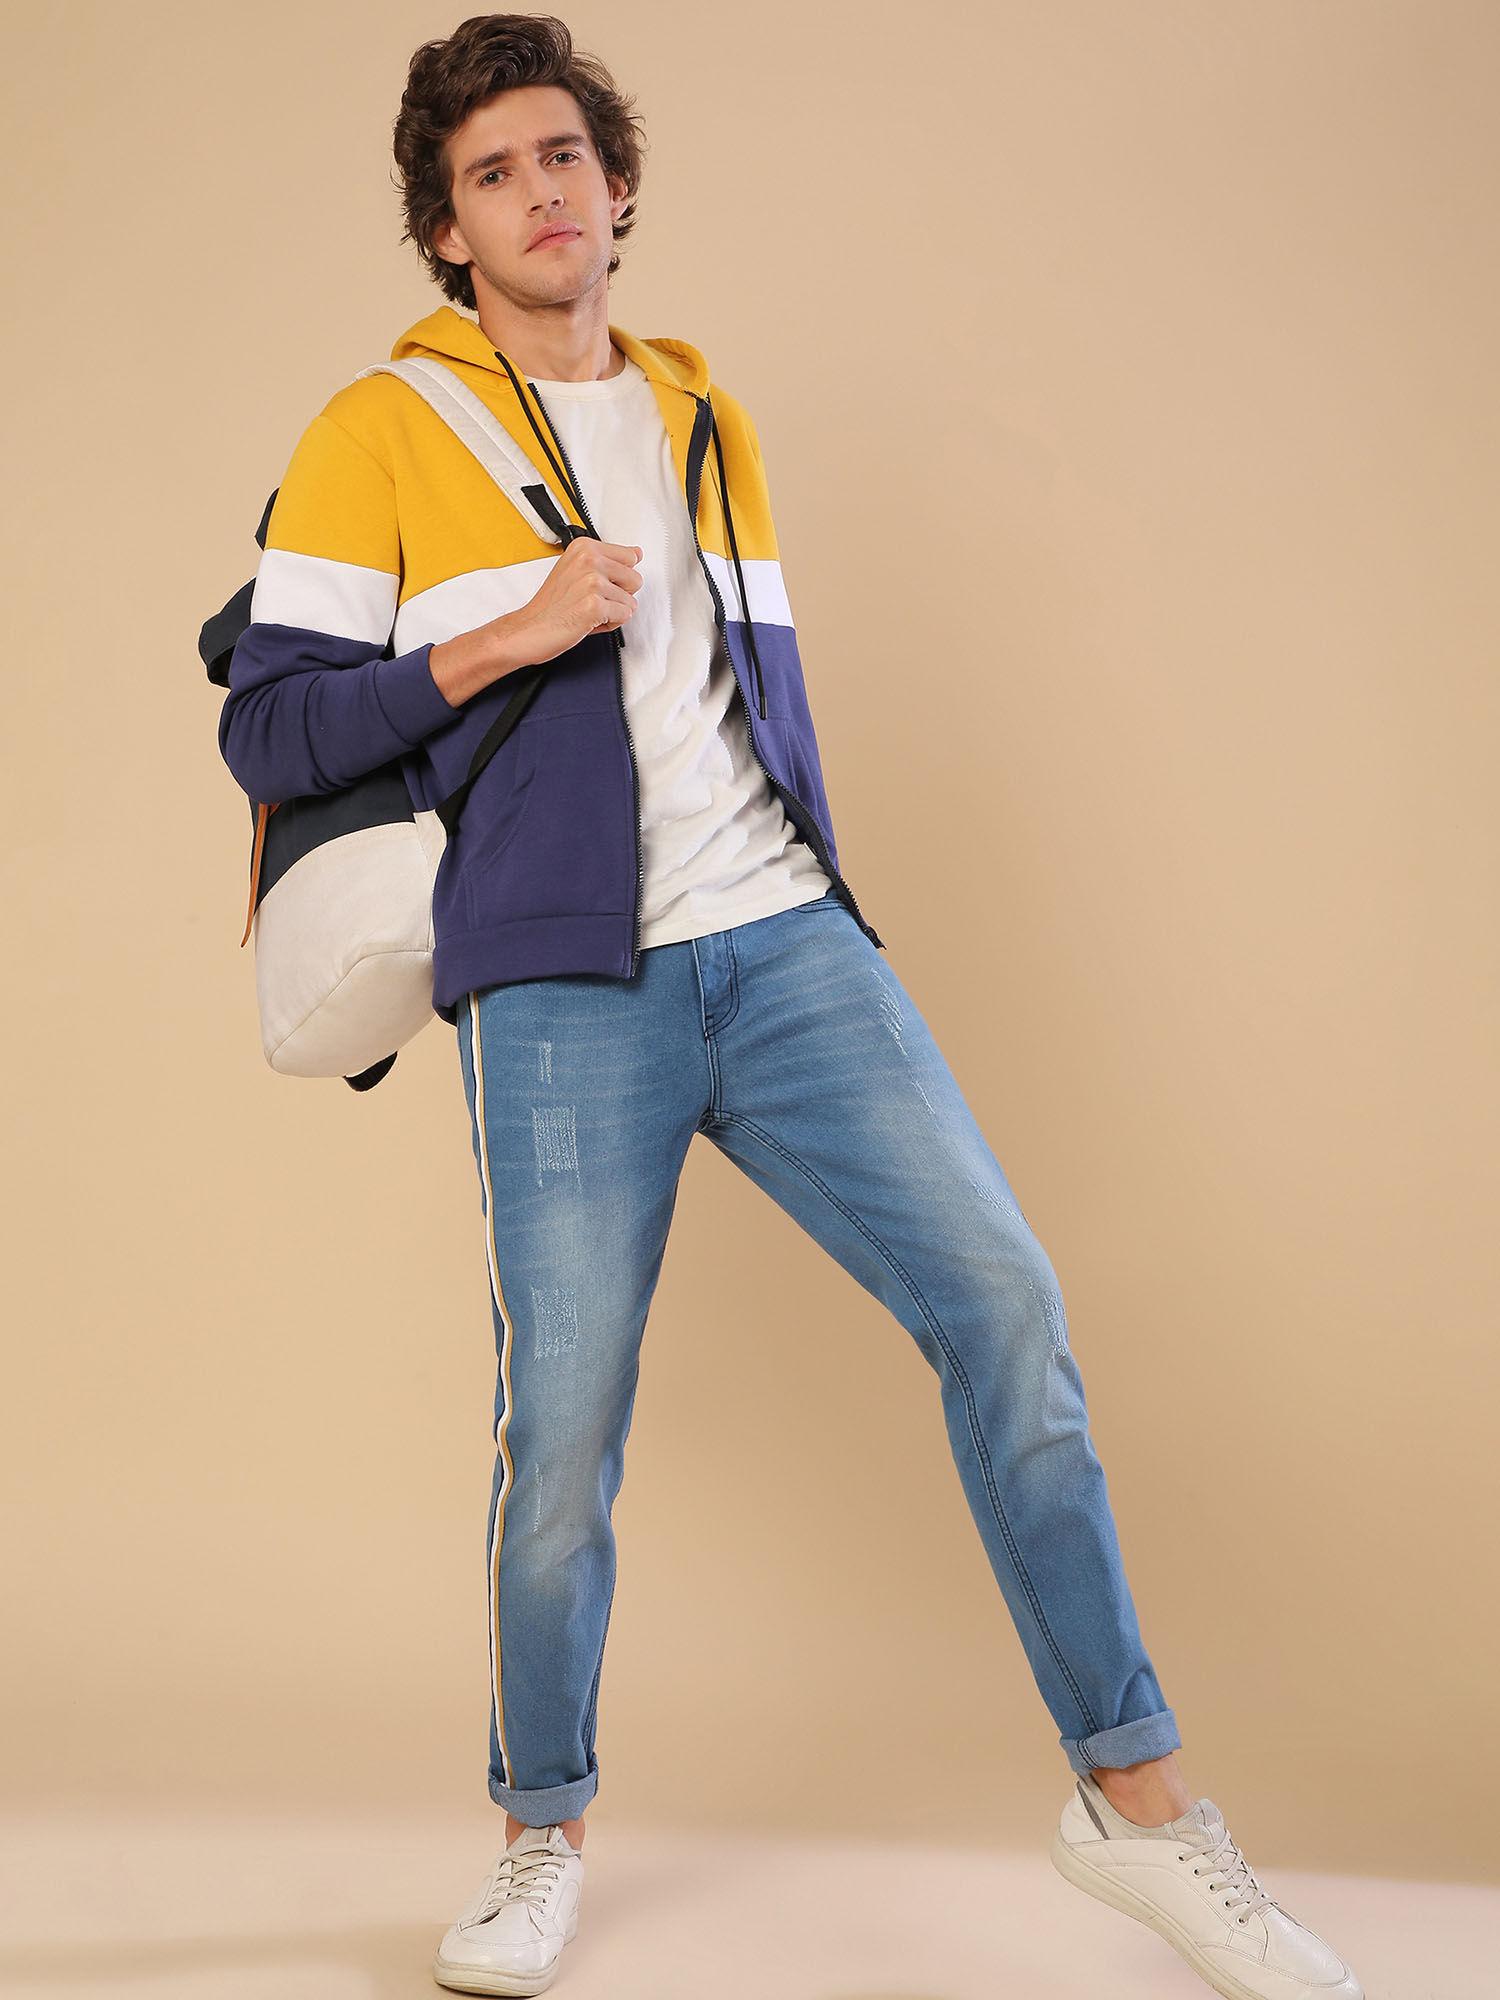 men-colorblock-stylish-casual-sweatshirts